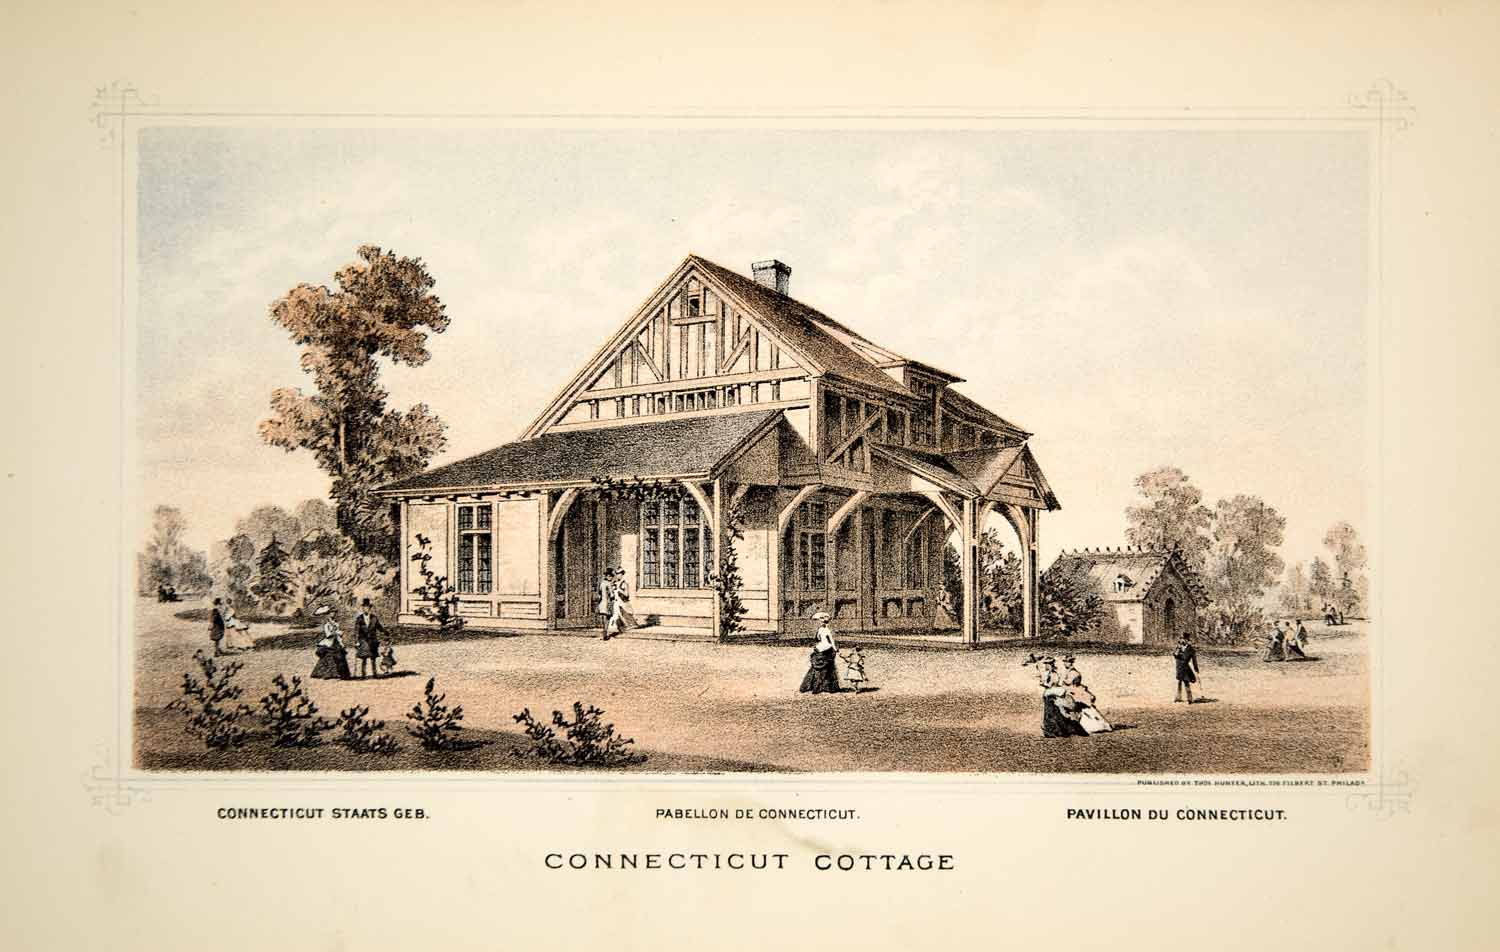 1876 Lithograph Centennial Fair Philadelphia Connecticut State Building CXP1